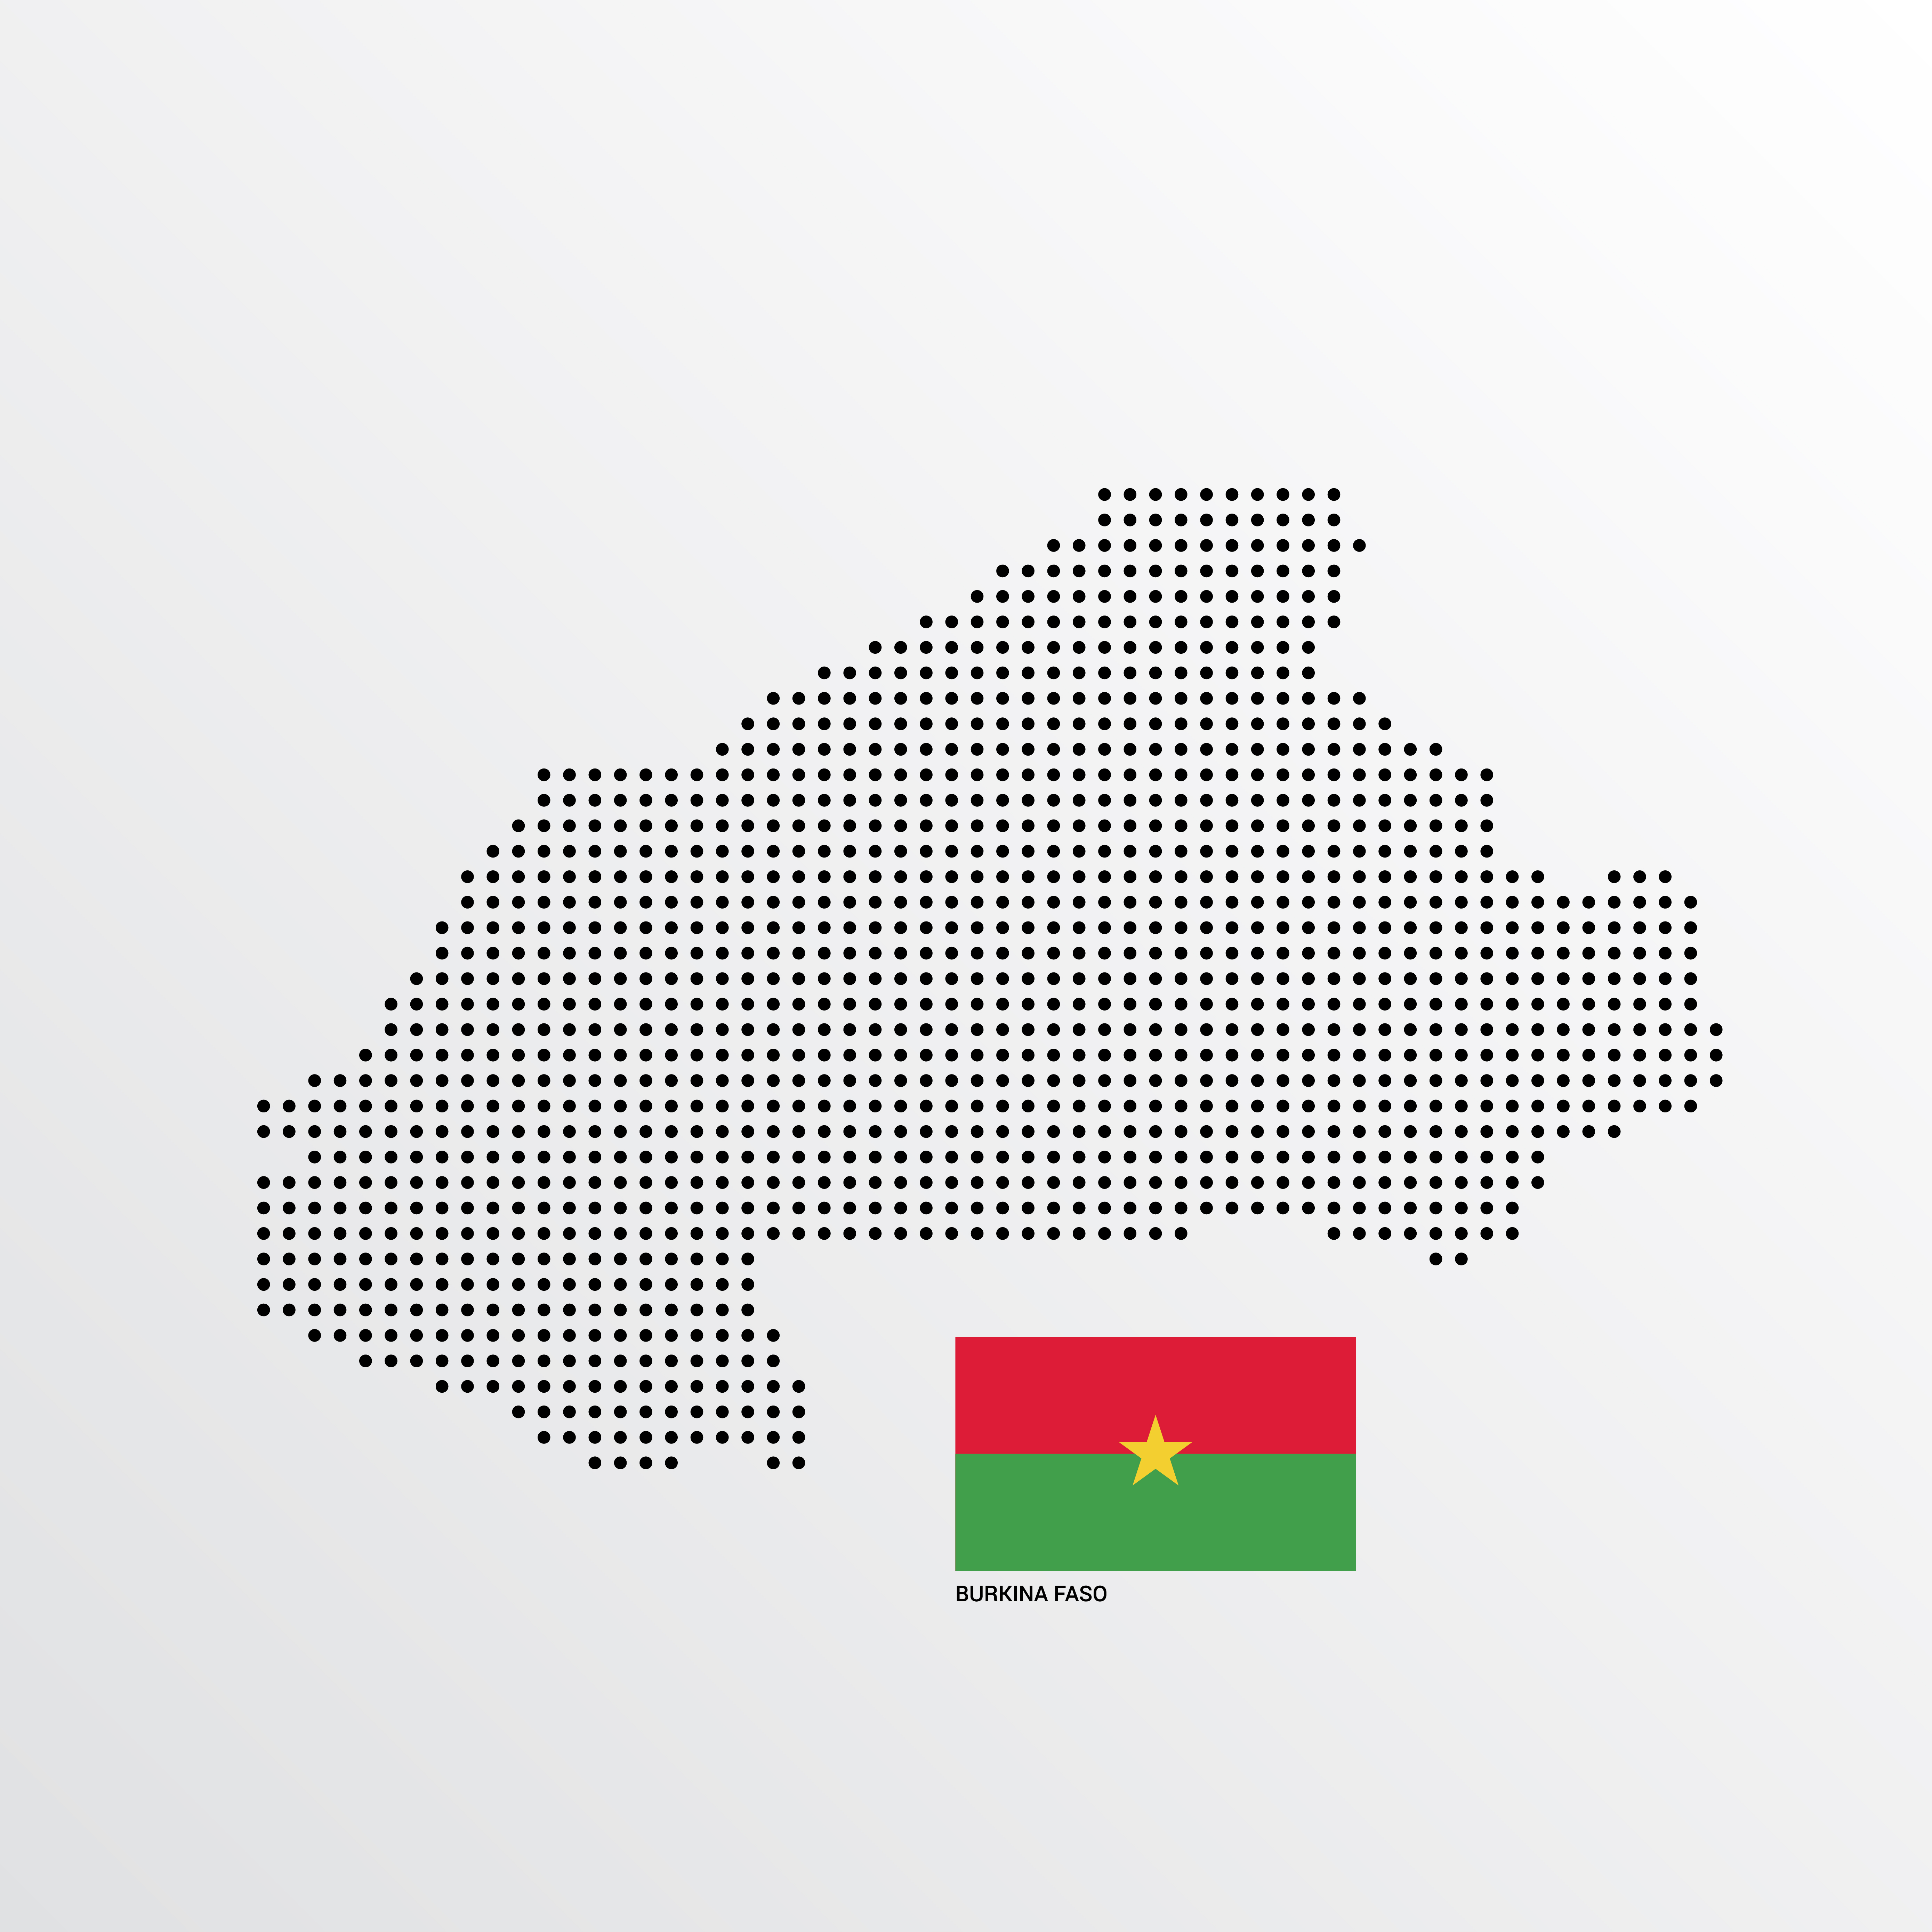 Burkina faso flag and map